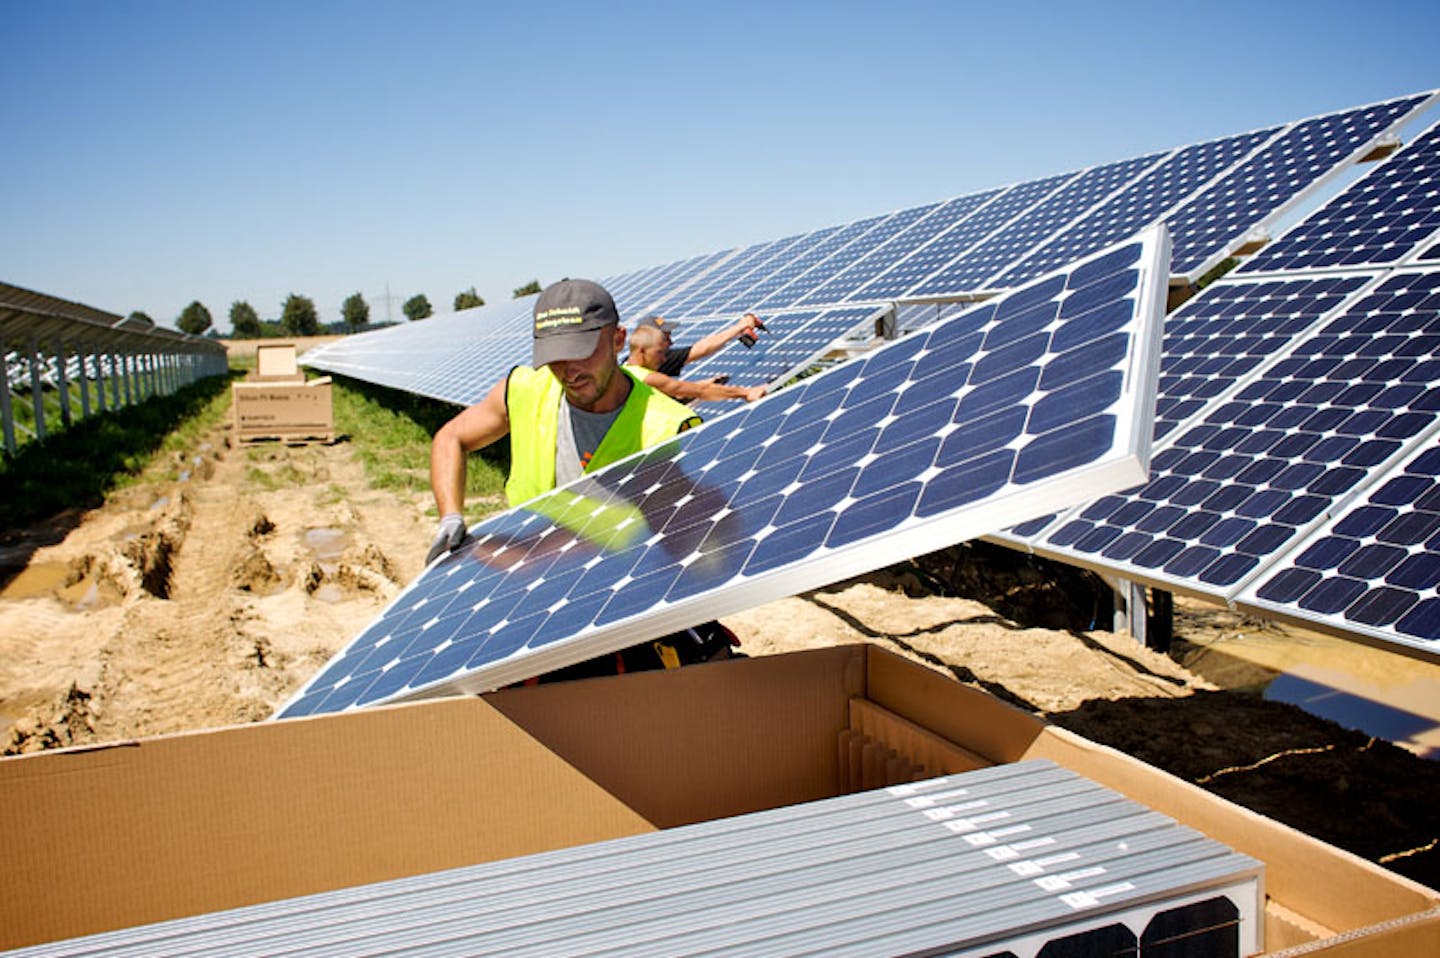 solar-panel-incentives-credits-and-rebates